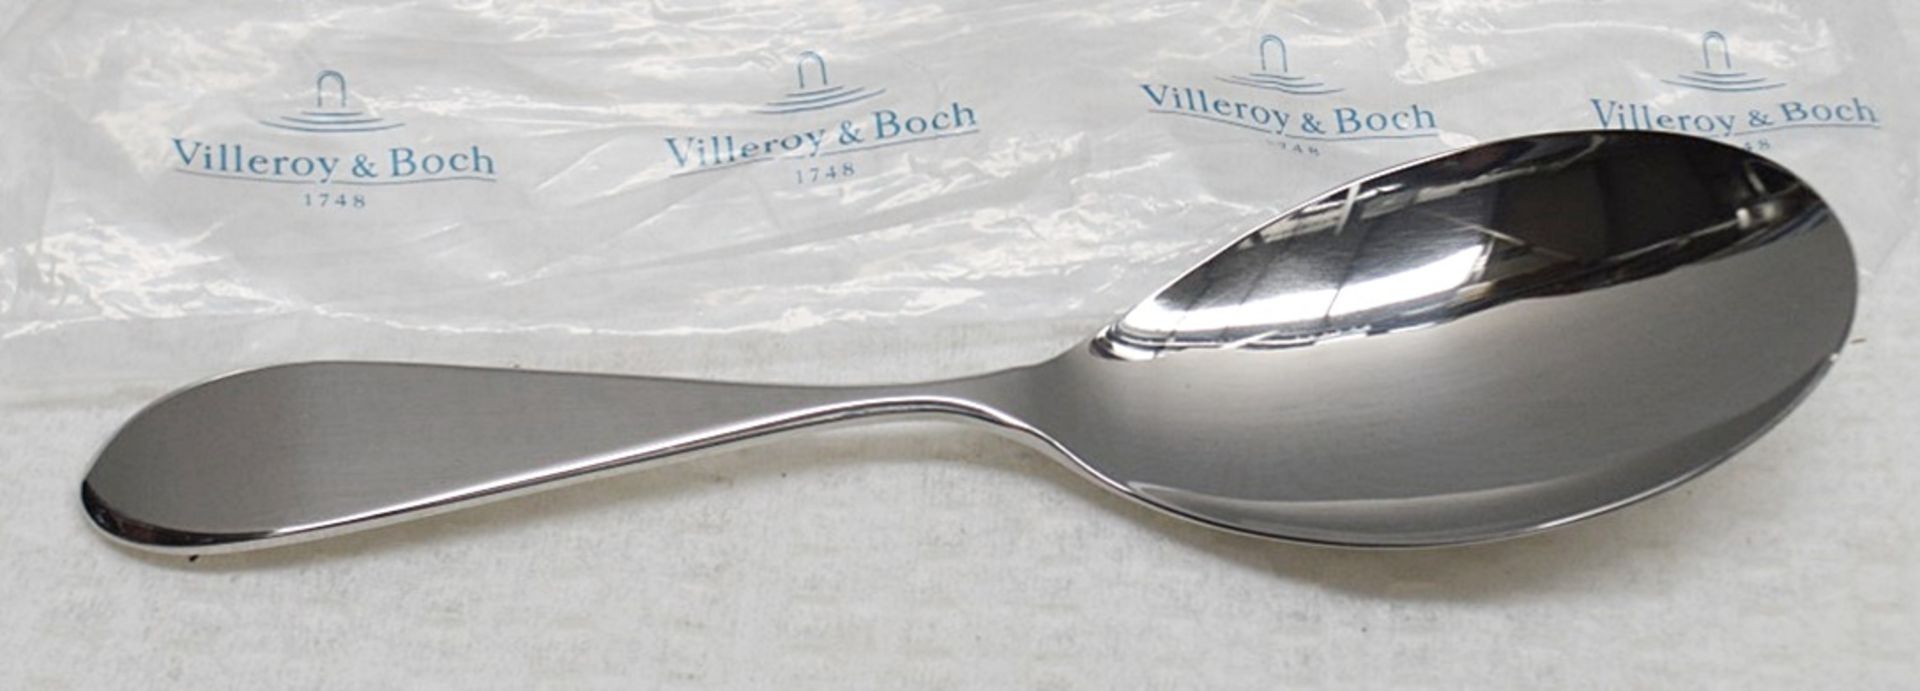 1 x Villeroy&Boch Rice Spoon - Ref: HHW73/JUL21 - CL679 - Location: Altrincham WA14 Condition